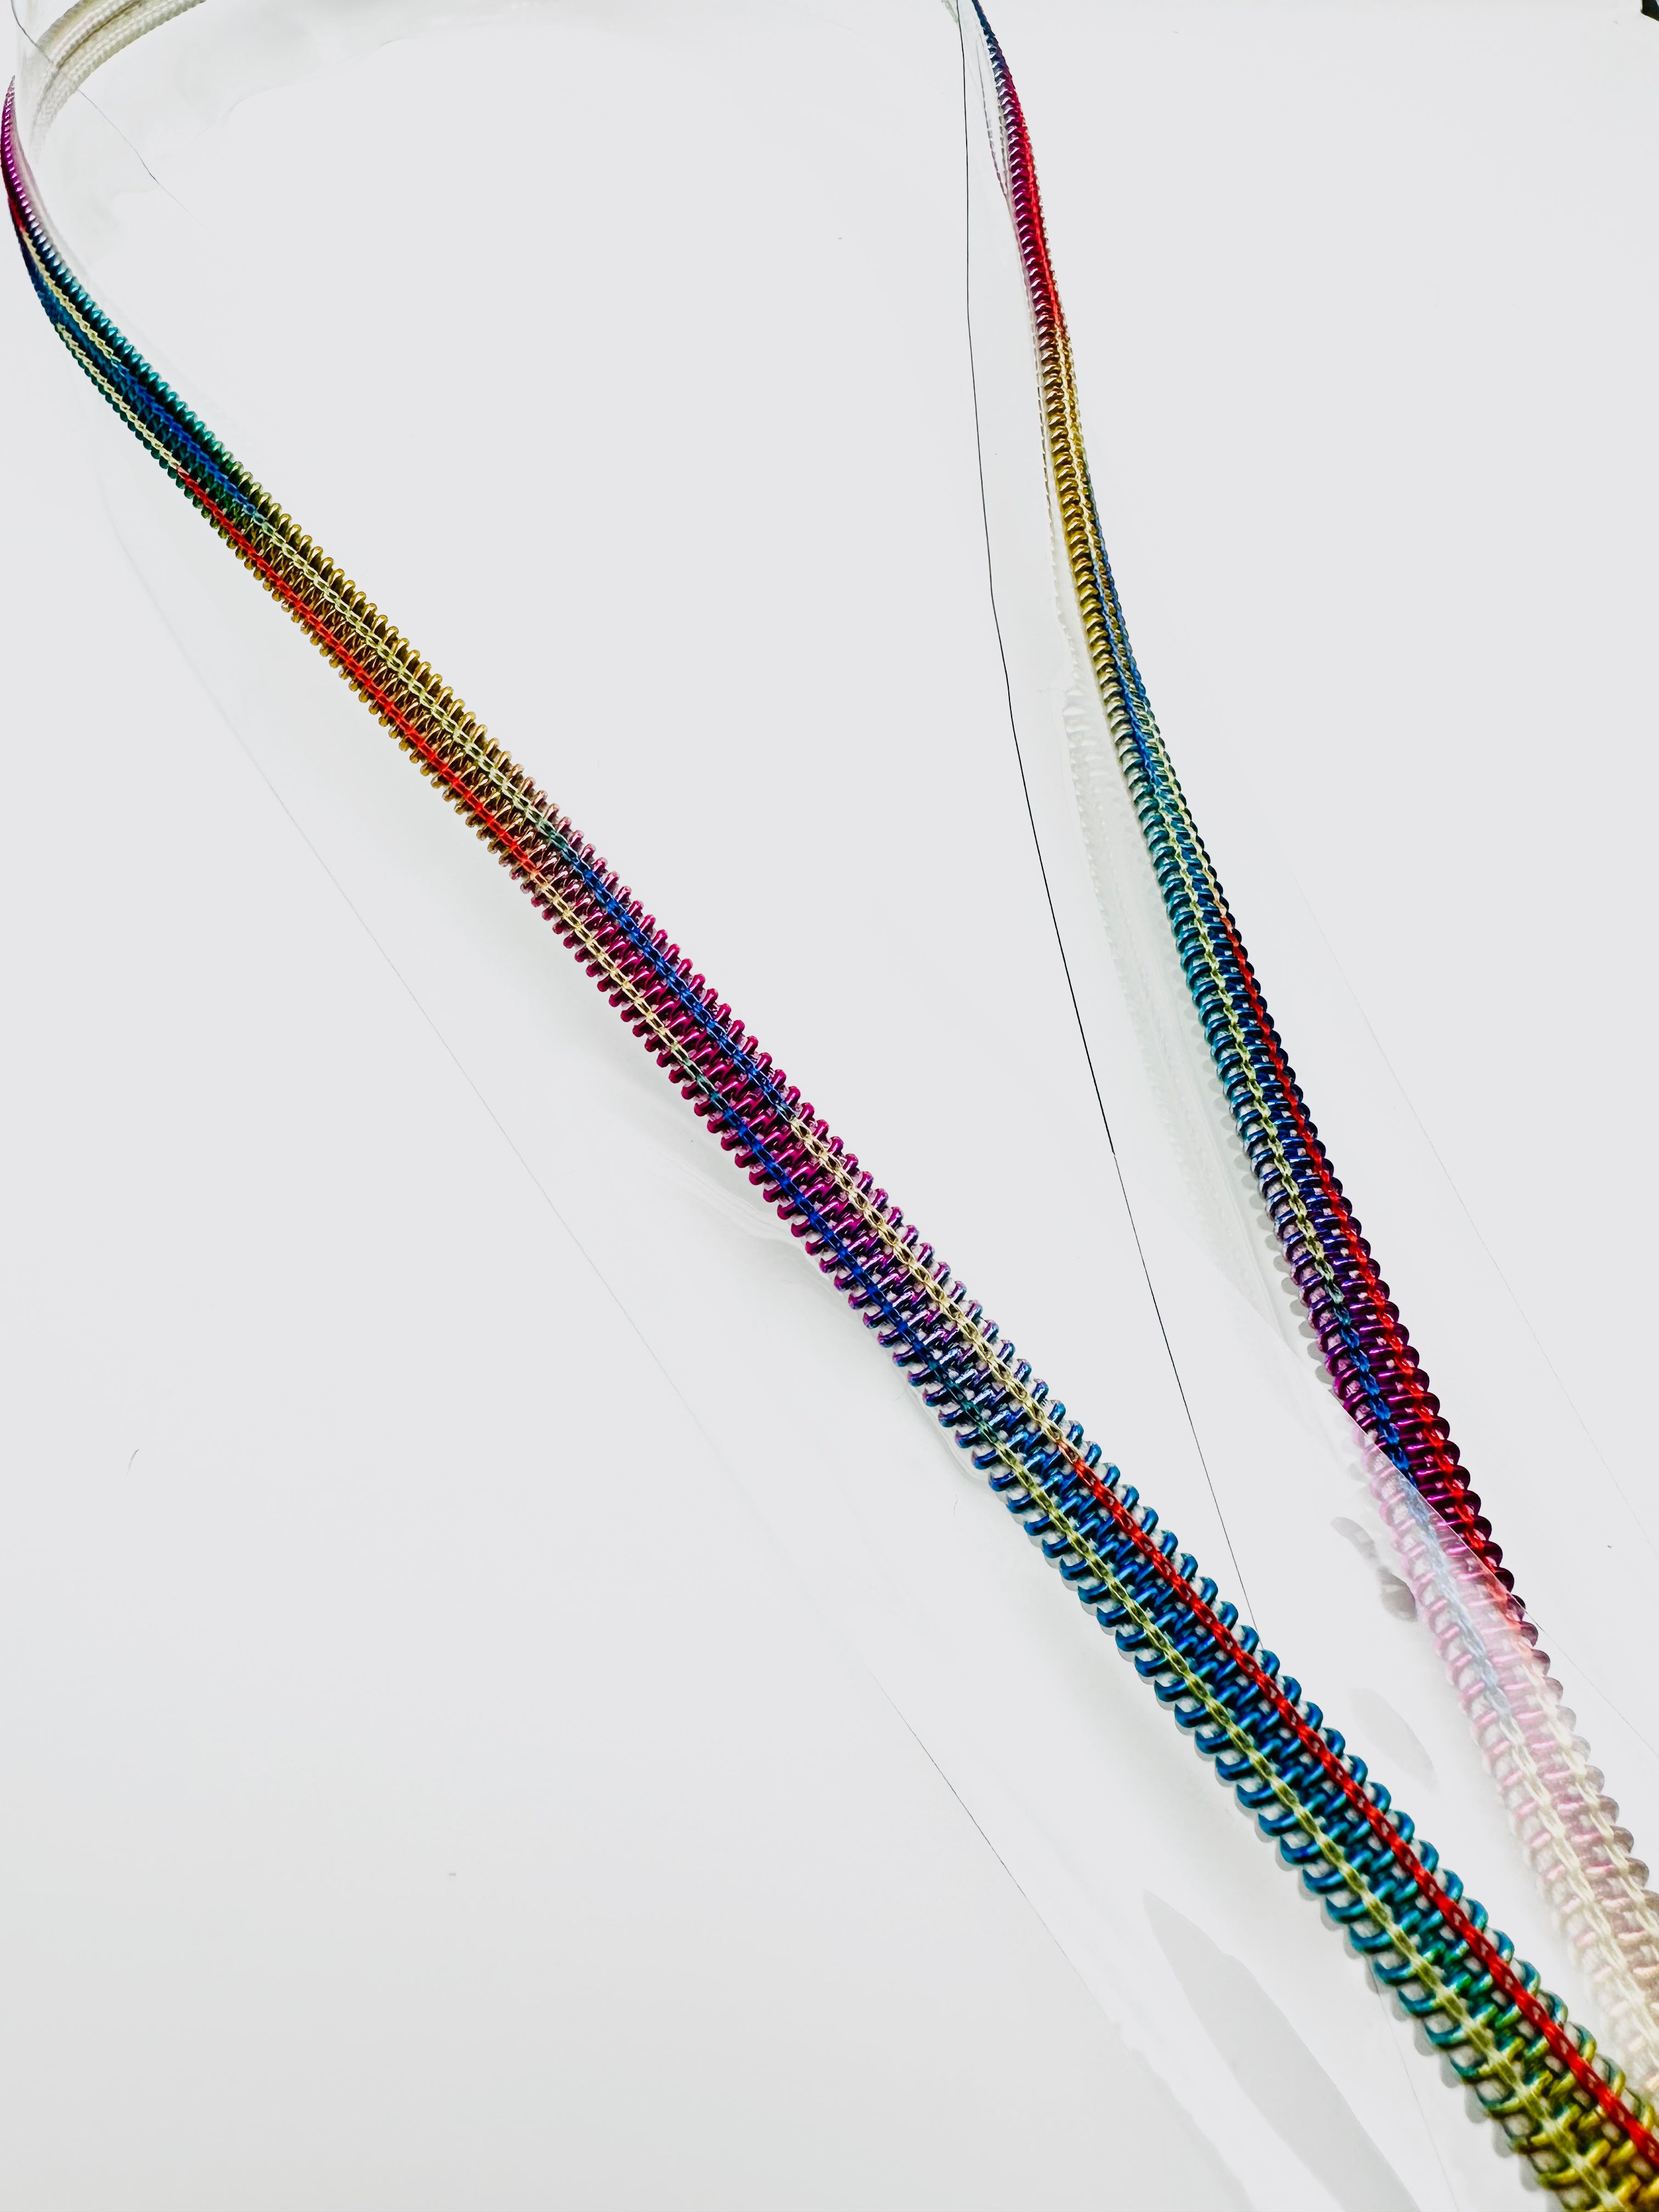 Clear vinyl zipper tape with rainbow Tie-dye teeth